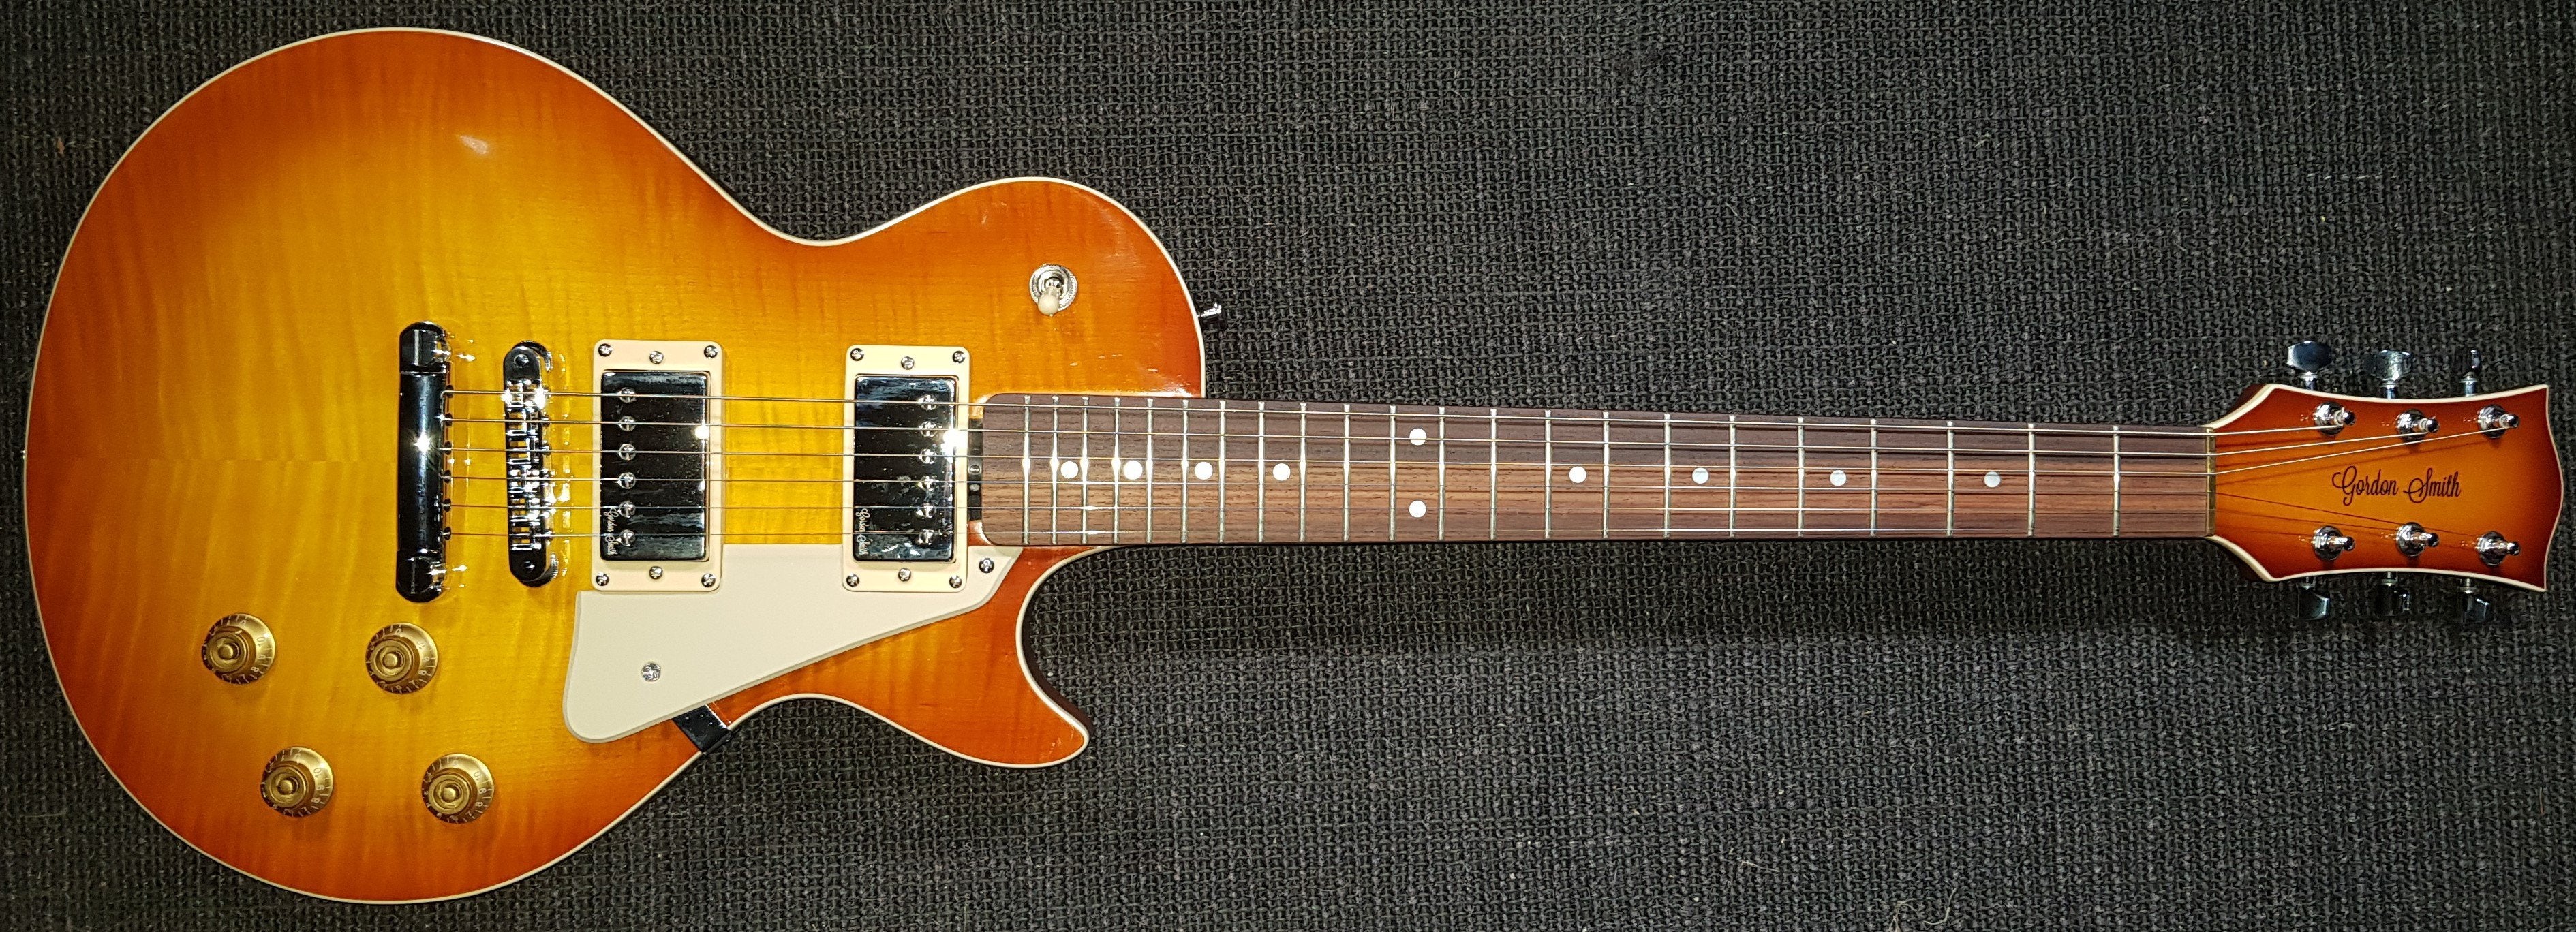 Gordon Smith Graduate Single Cut, Electric Guitar for sale at Richards Guitars.